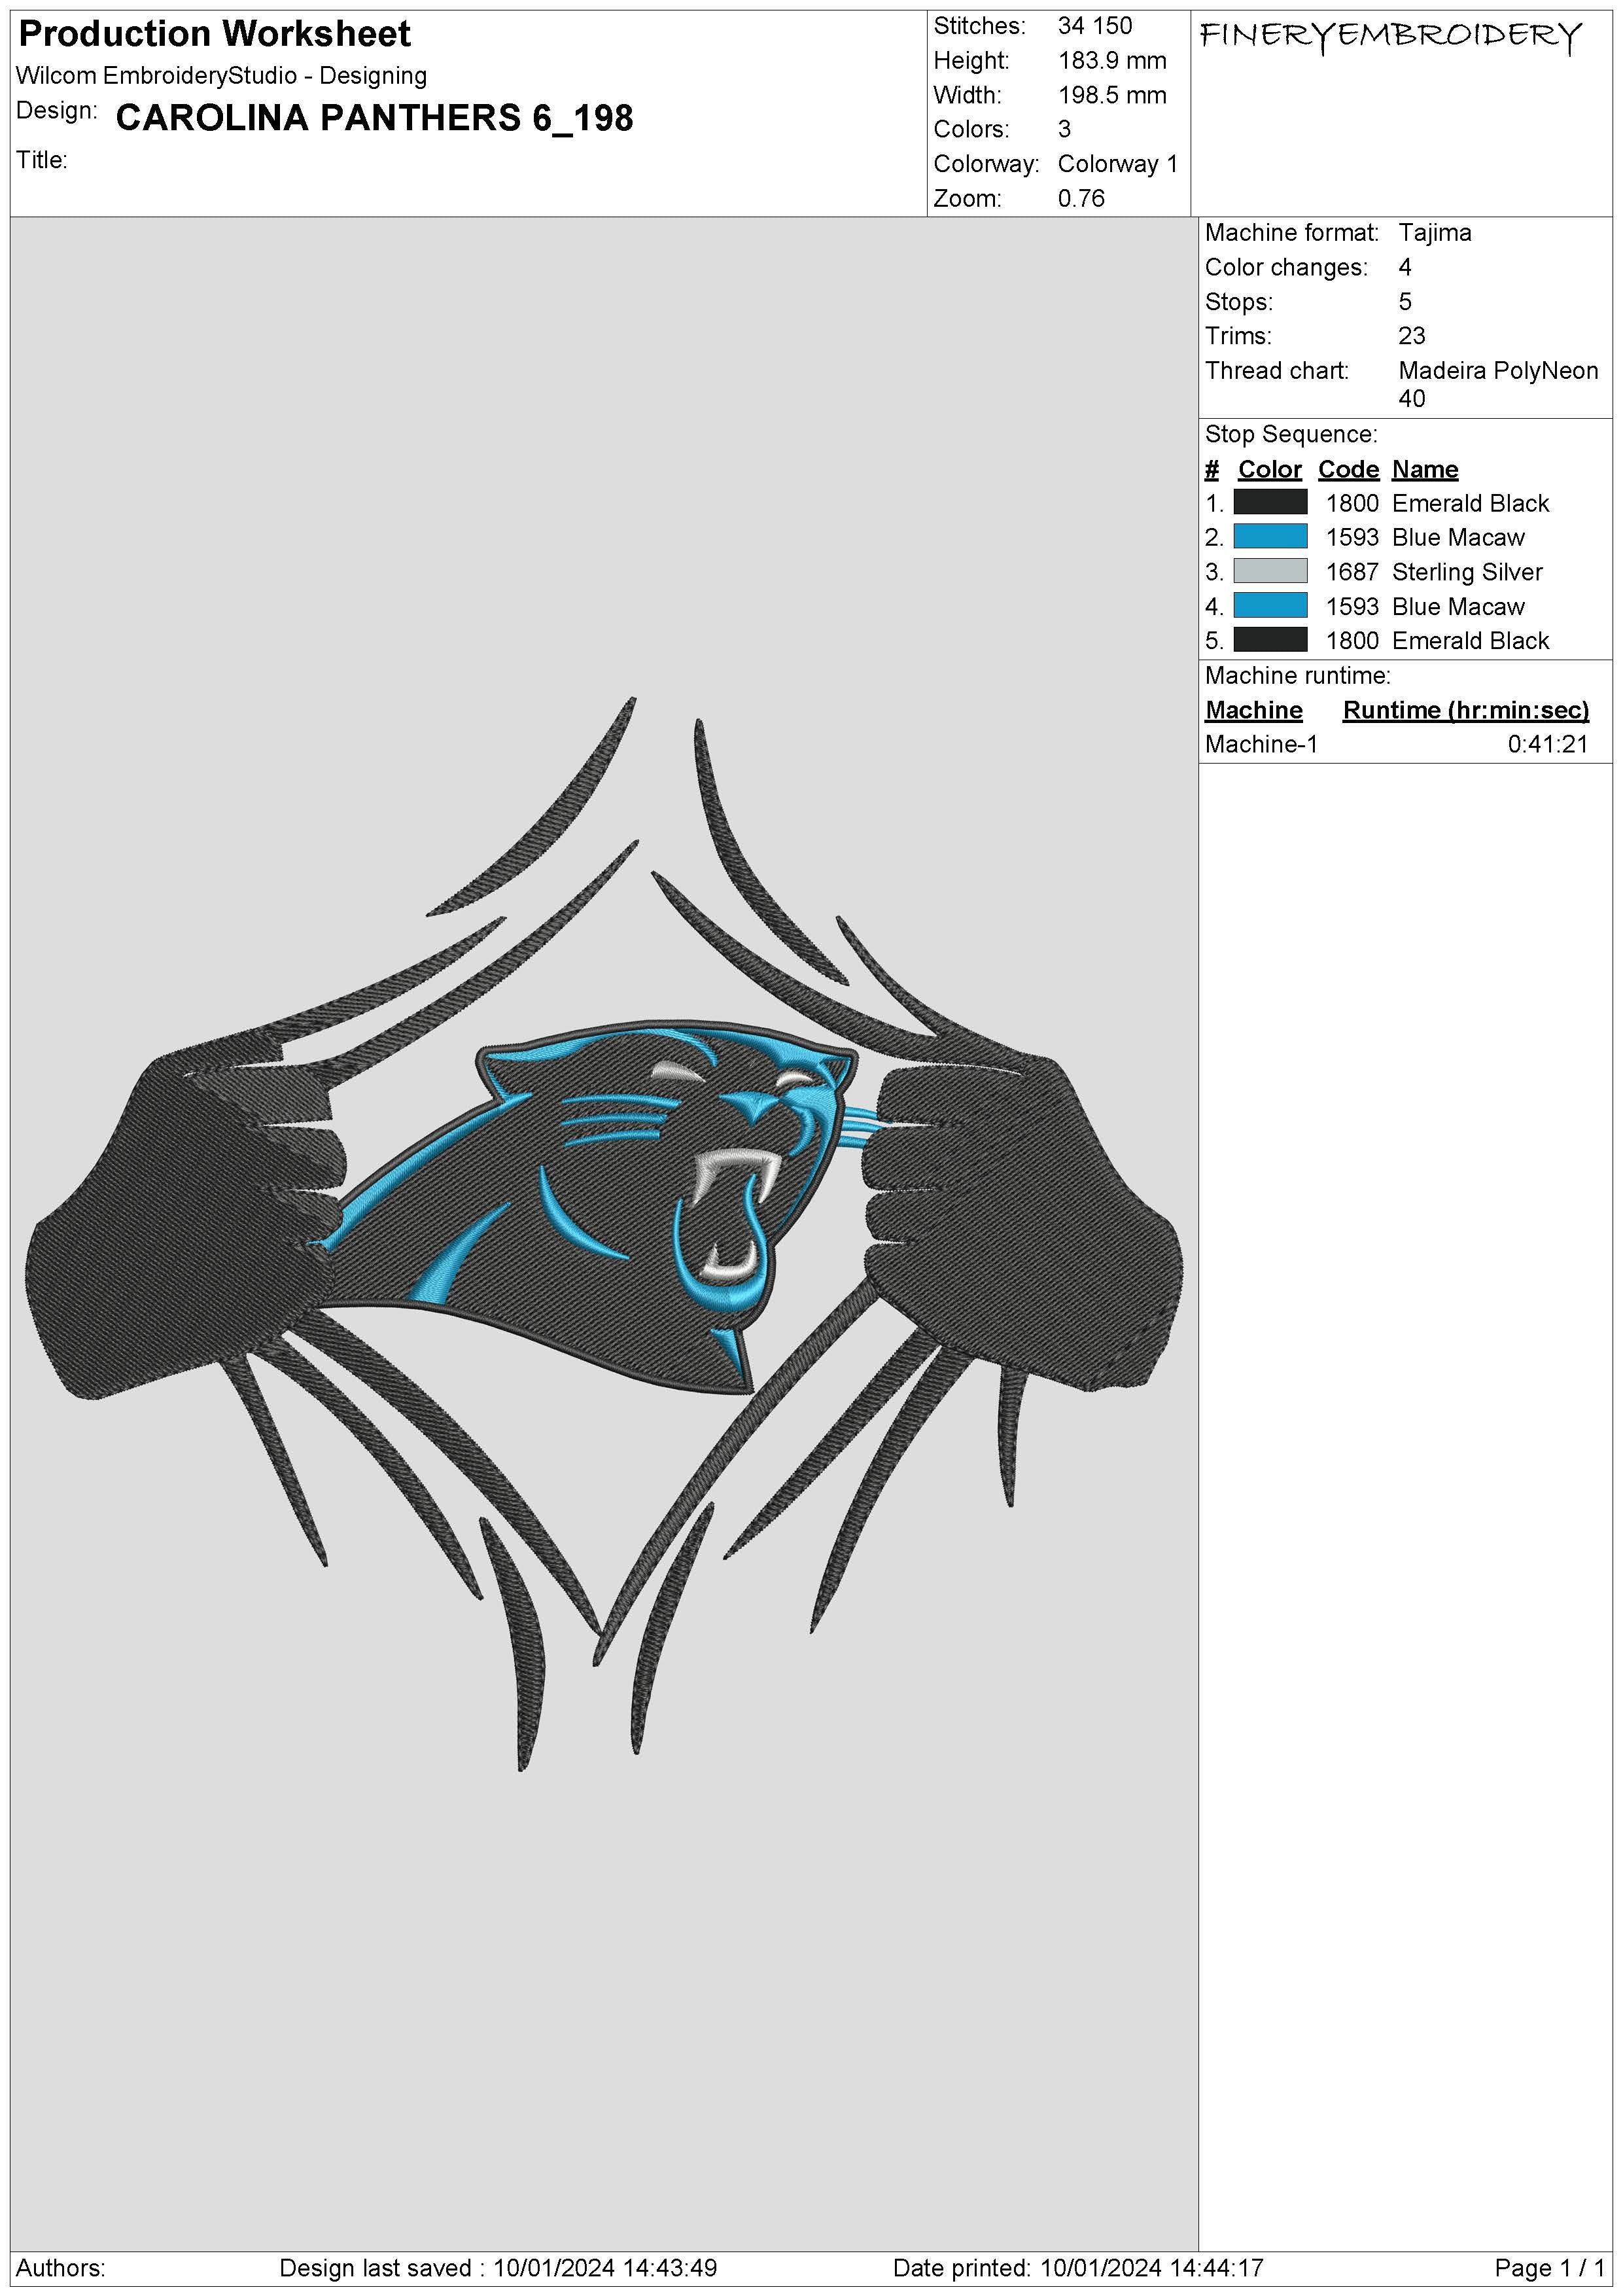 Carolina Panthers 6 : Embroidery Design